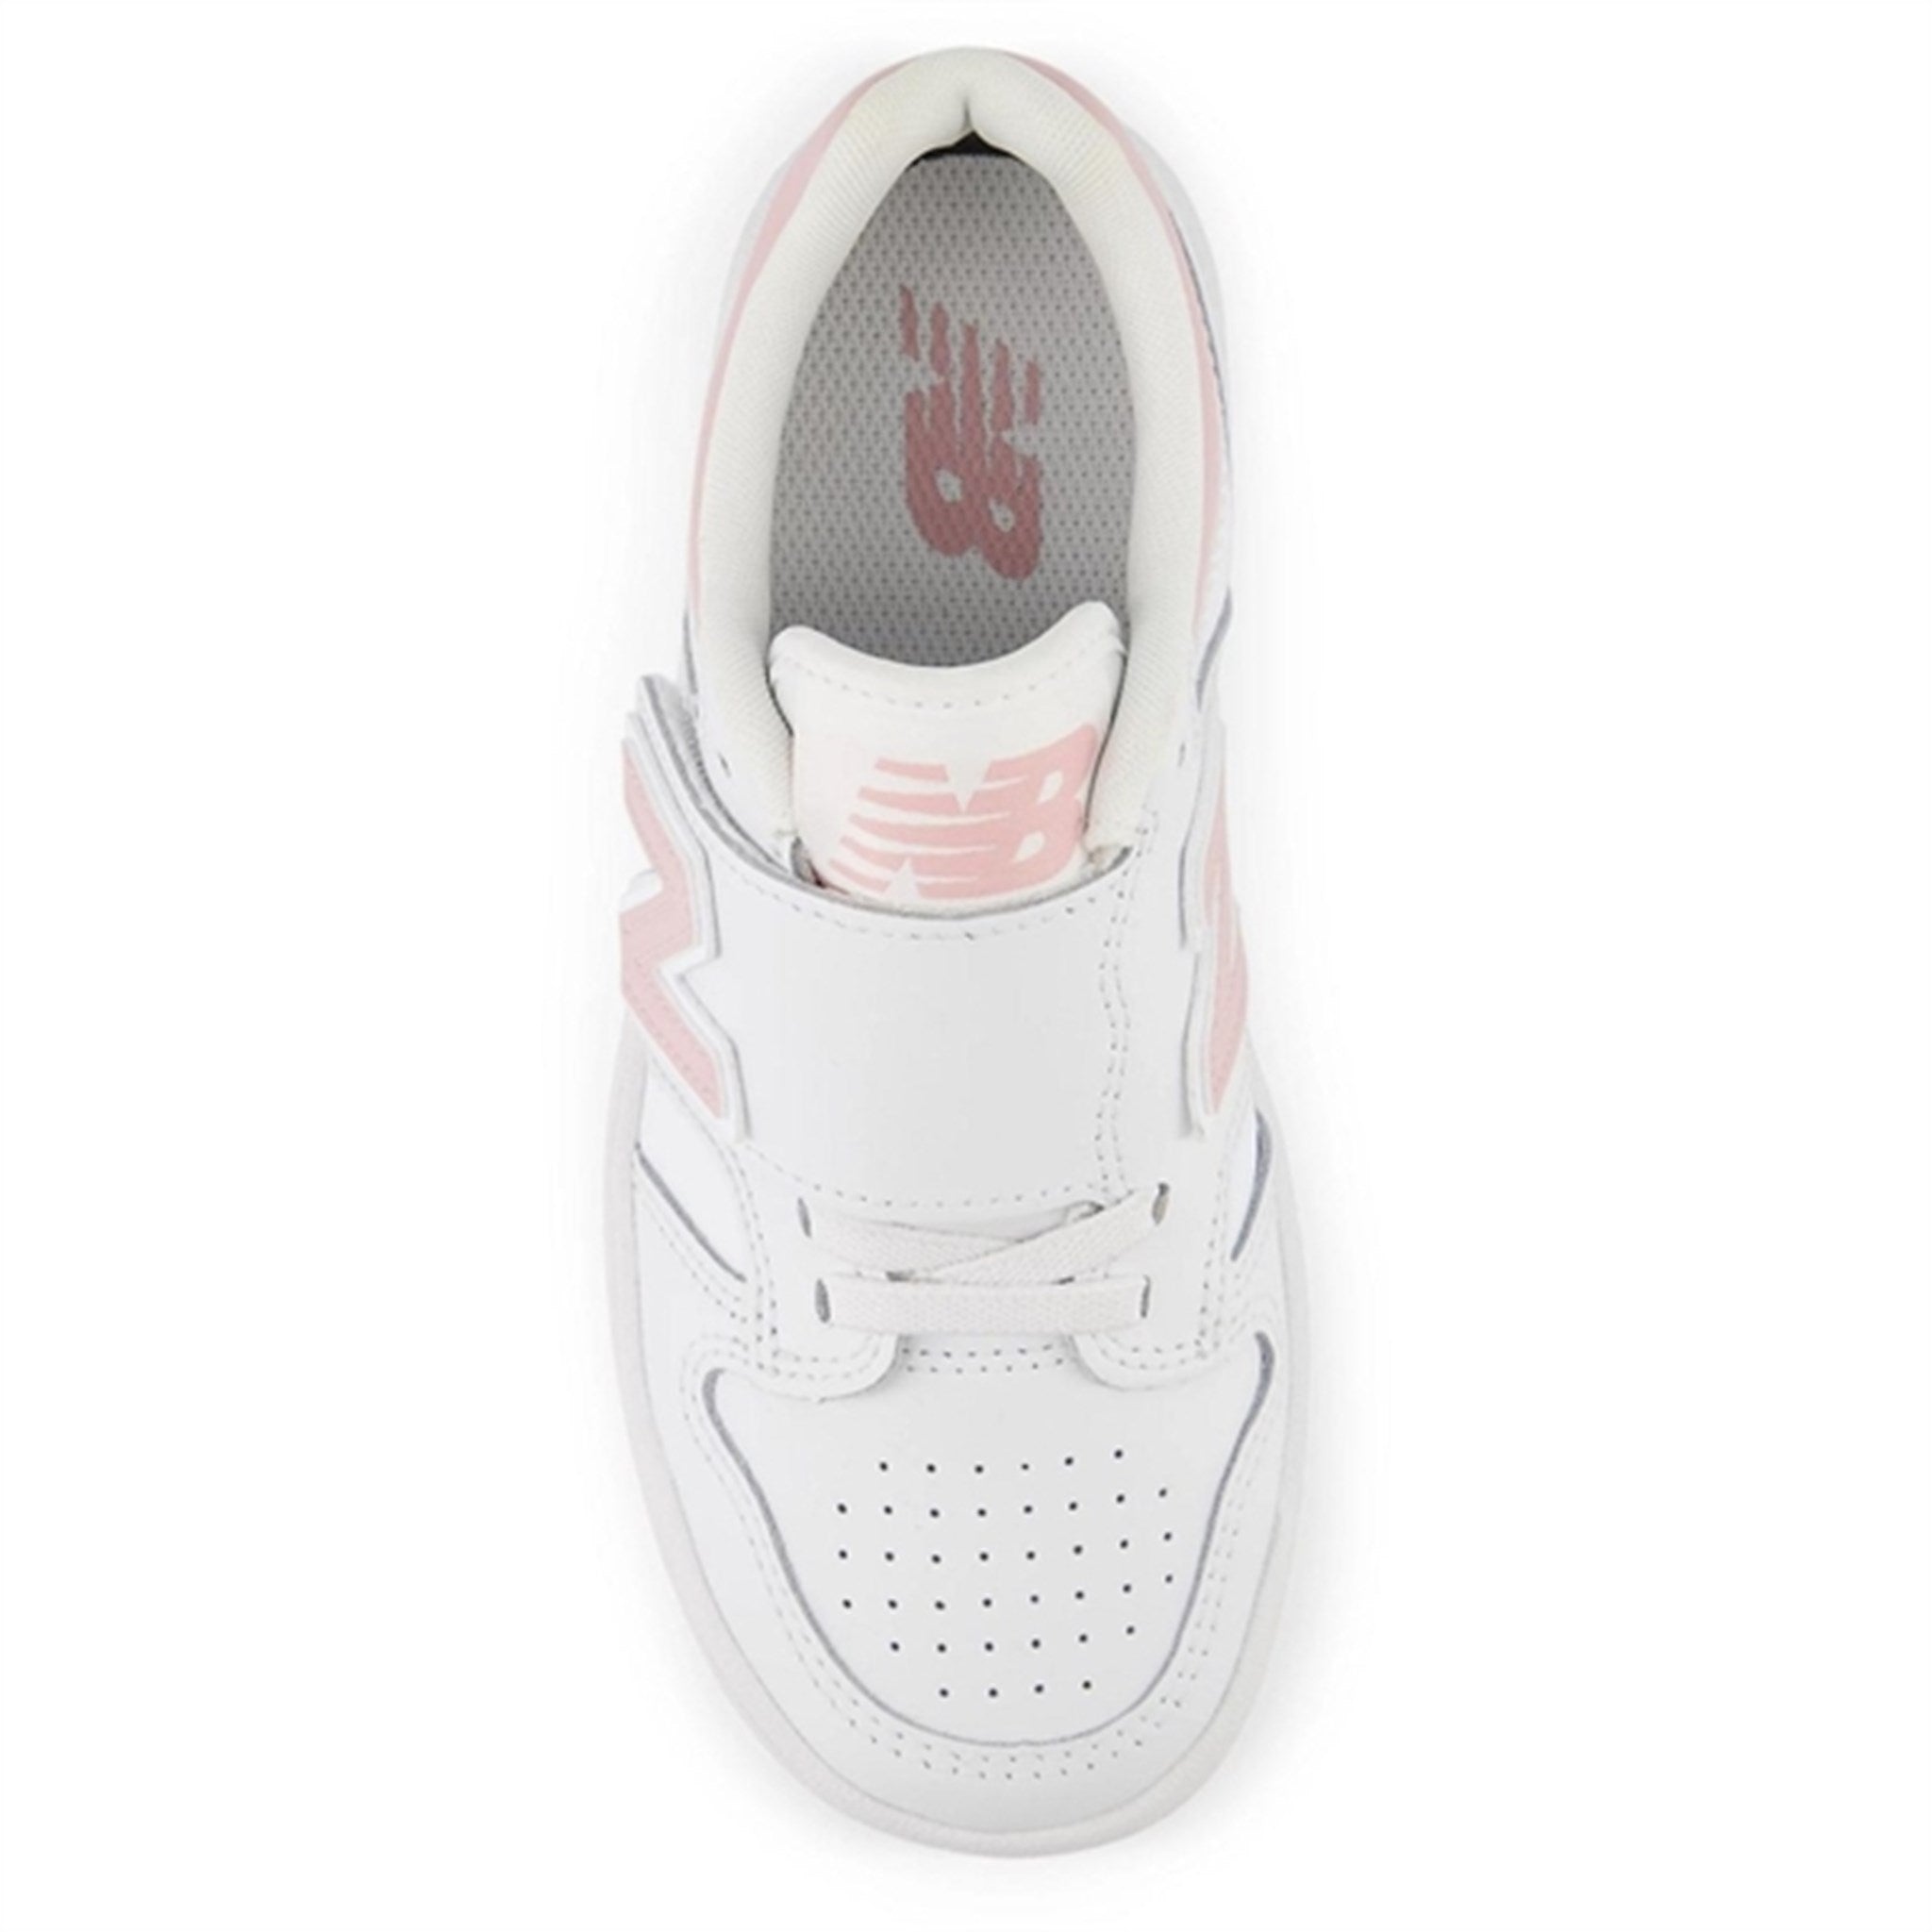 New Balance BB480 Kids Sneakers White 4